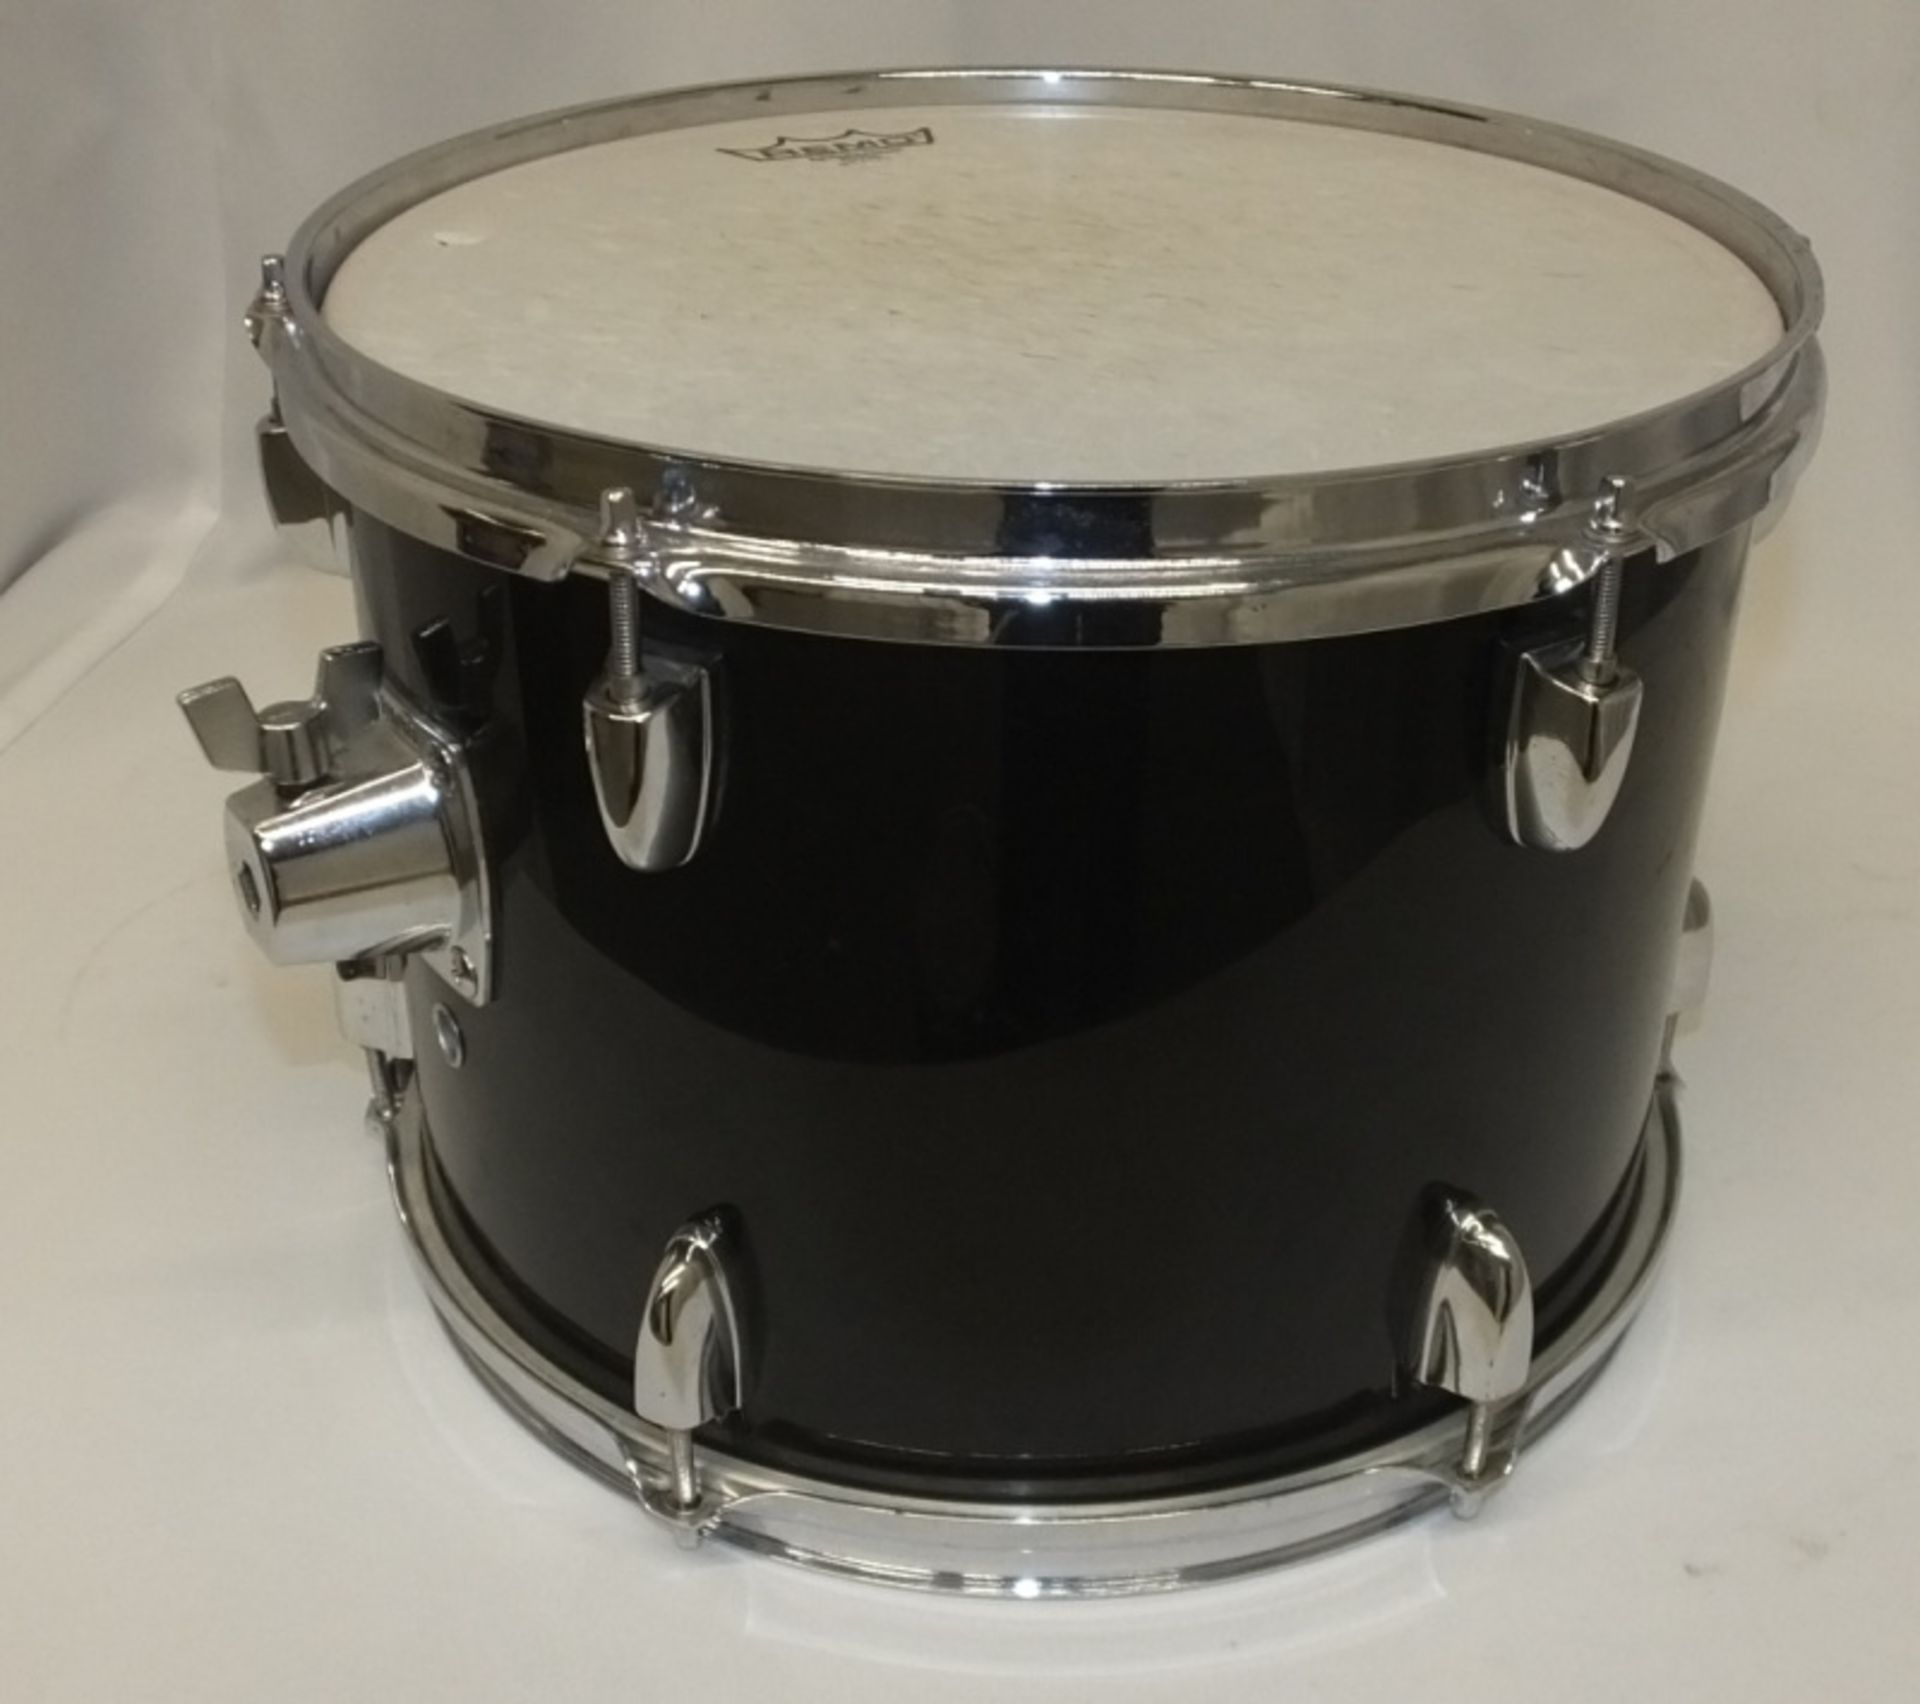 Yamaha Gigmaker Drum Kit - details in the description - Image 10 of 31